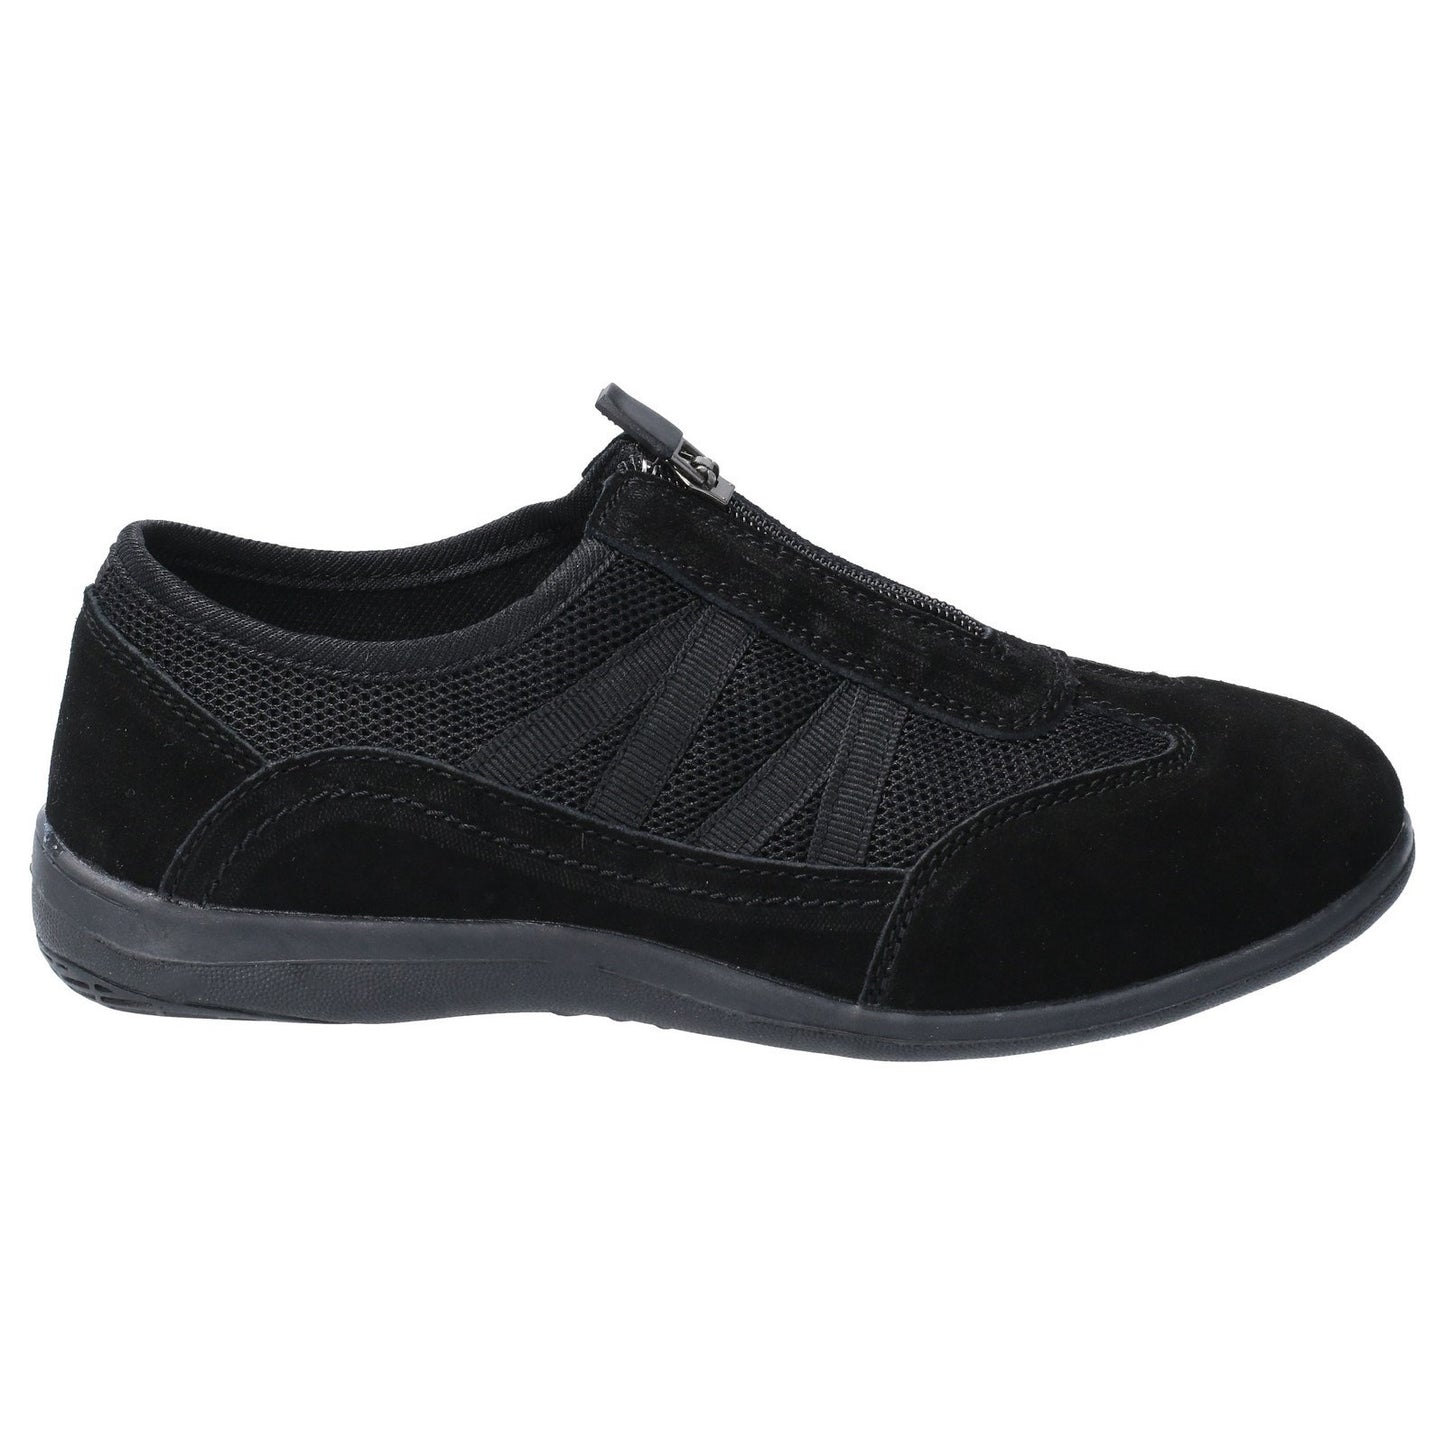 Women's Fleet & Foster Mombassa Comfort Shoe